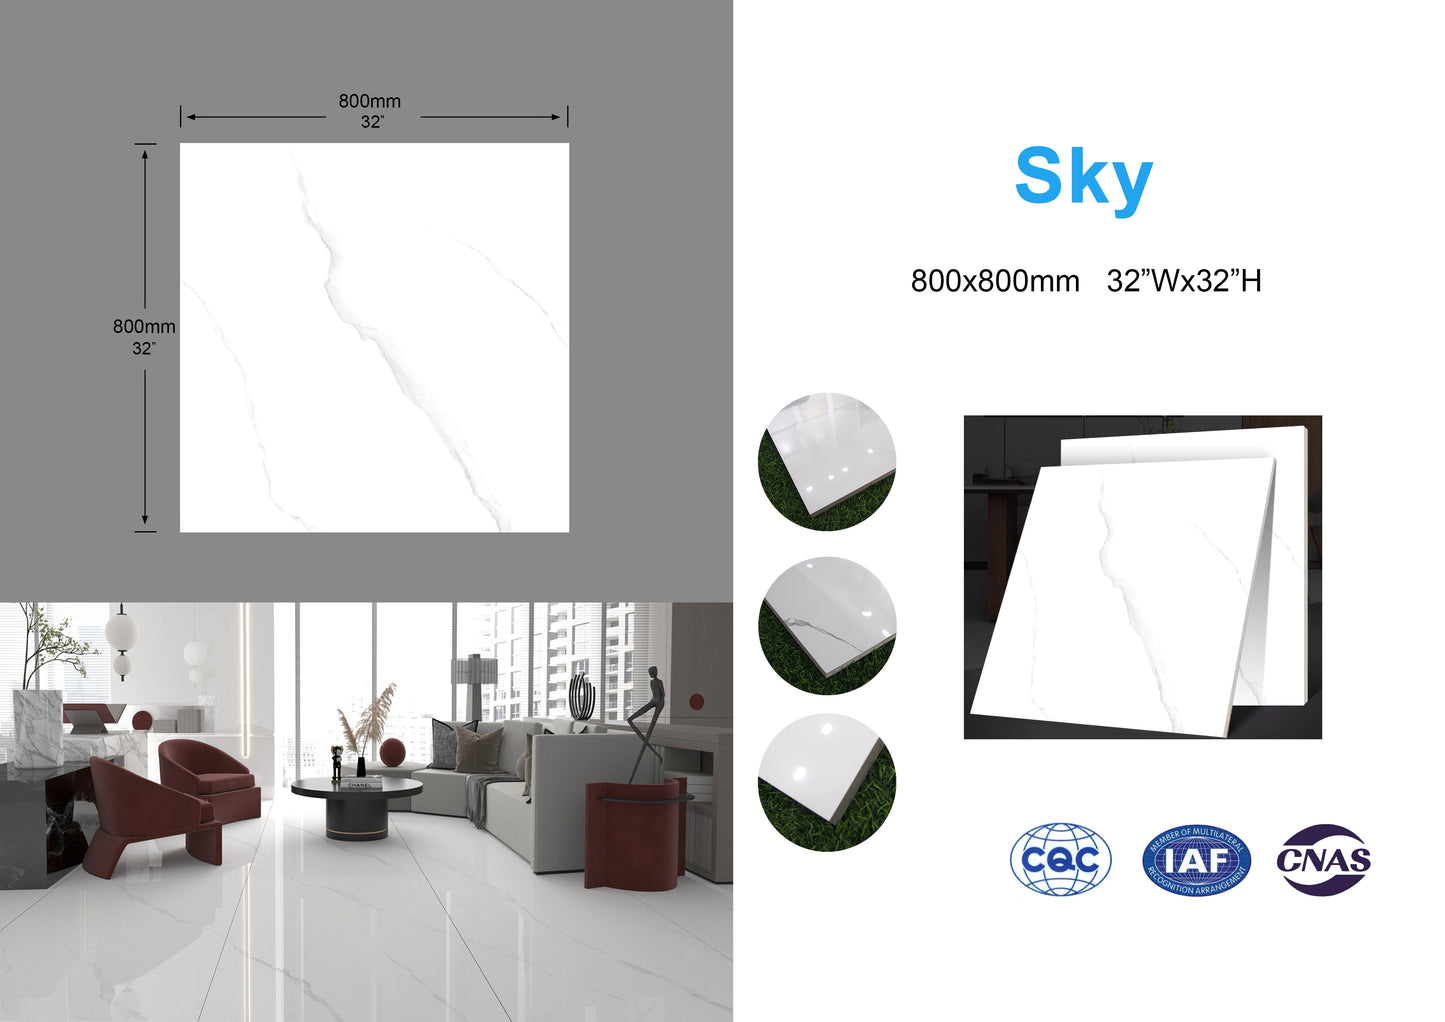 Sky family Full Polished Glazed Tile 32"x32" 3pcs/box 21.33sf/box $1.59/sf (15 days return/exchange) Bulk Deal 2000sf+ $1.39/SF(No return/no exchange)